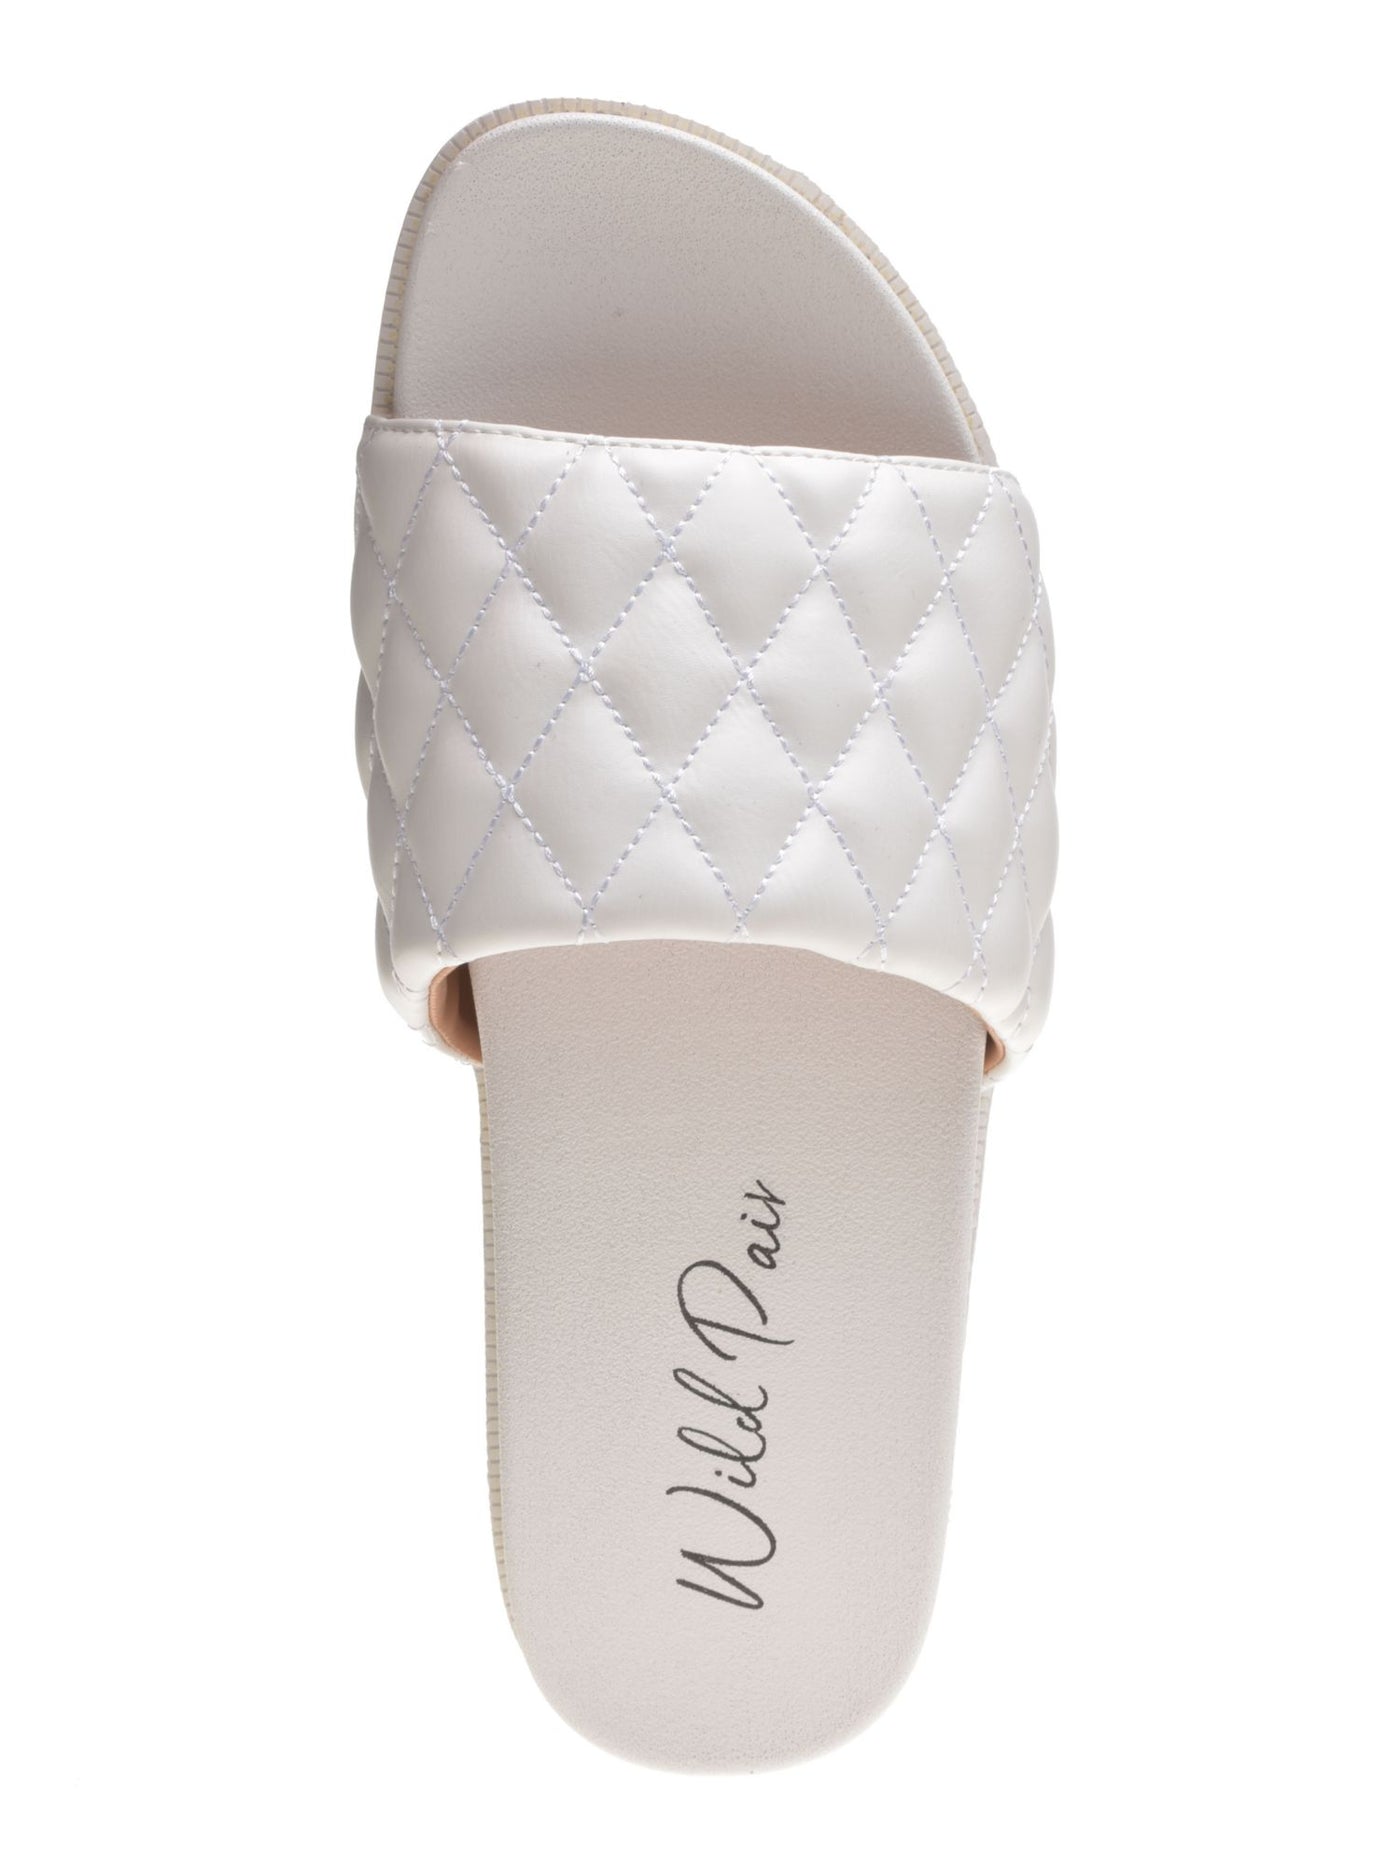 WILD PAIR Womens White Quilt Comfort Elevated Round Toe Platform Slip On Slide Sandals Shoes 10 M